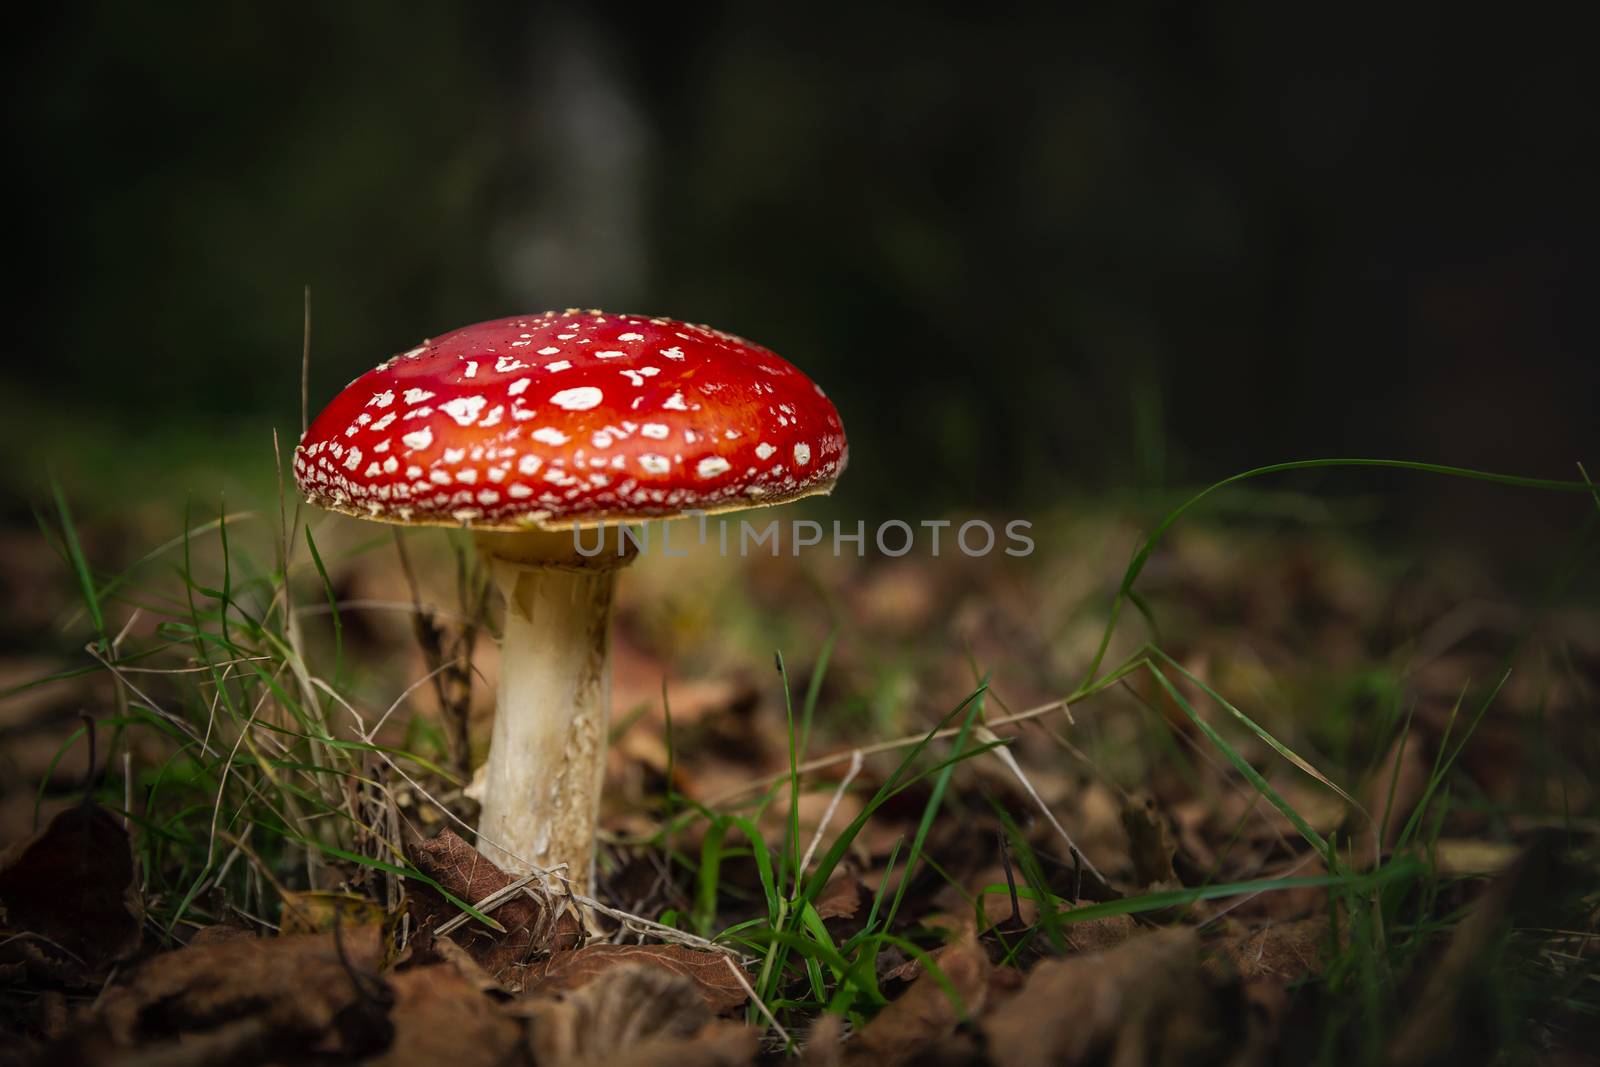 Amanita mushroom by Iko